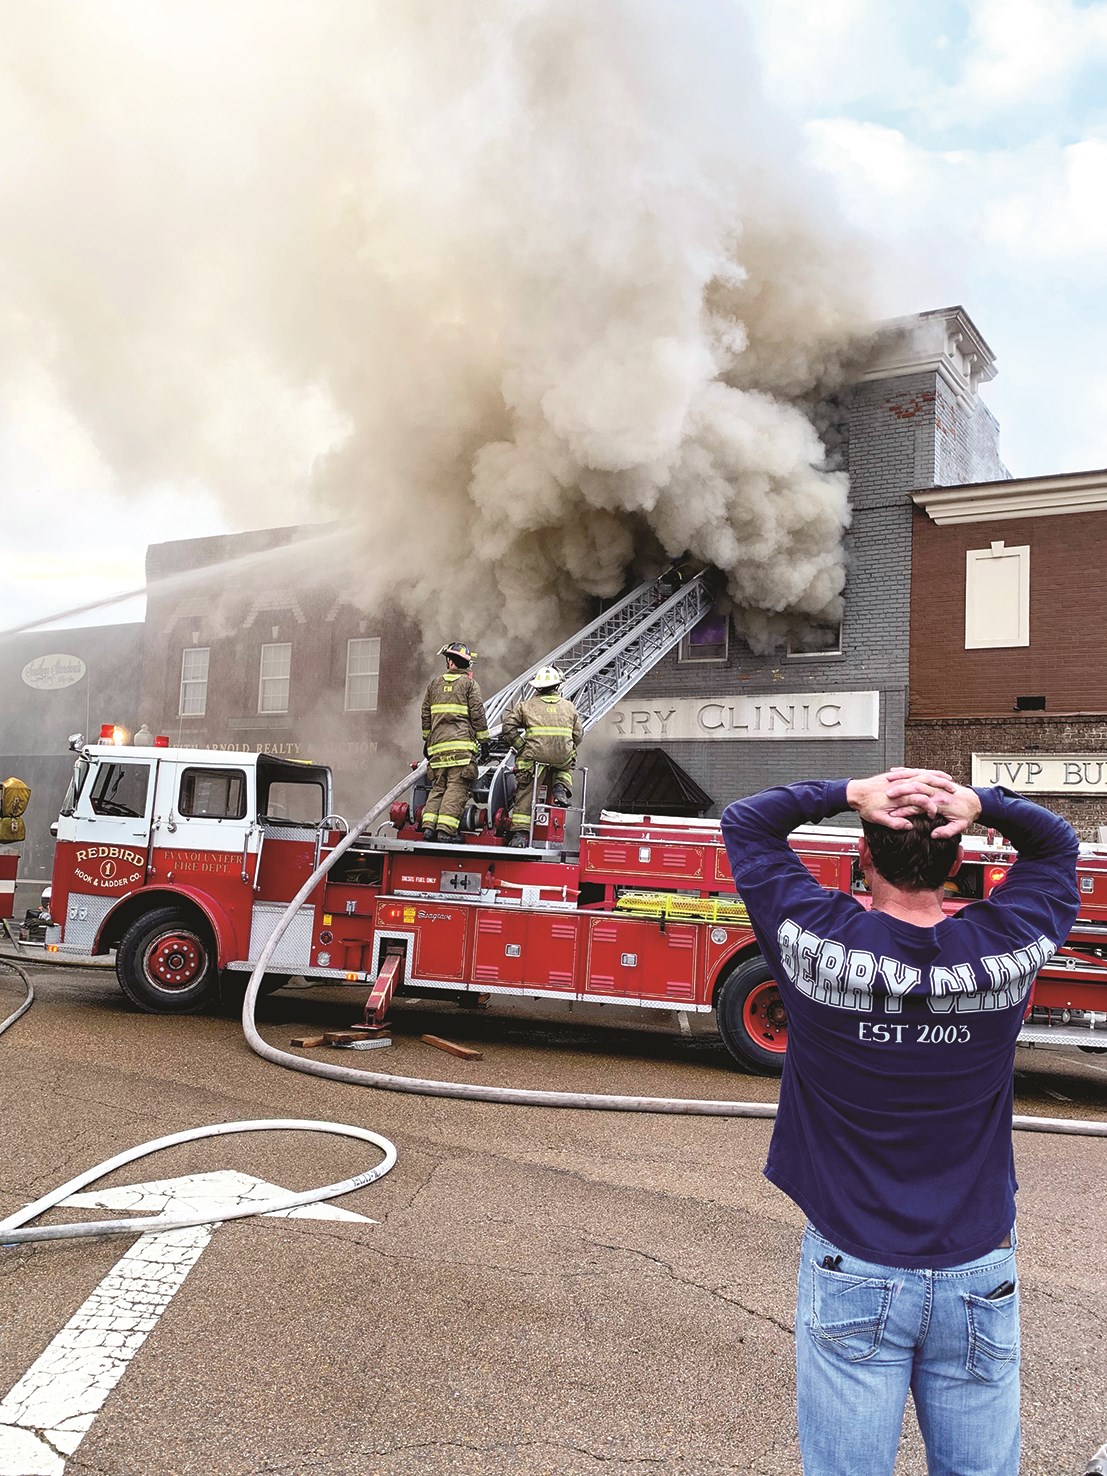 historic building fire shocks community